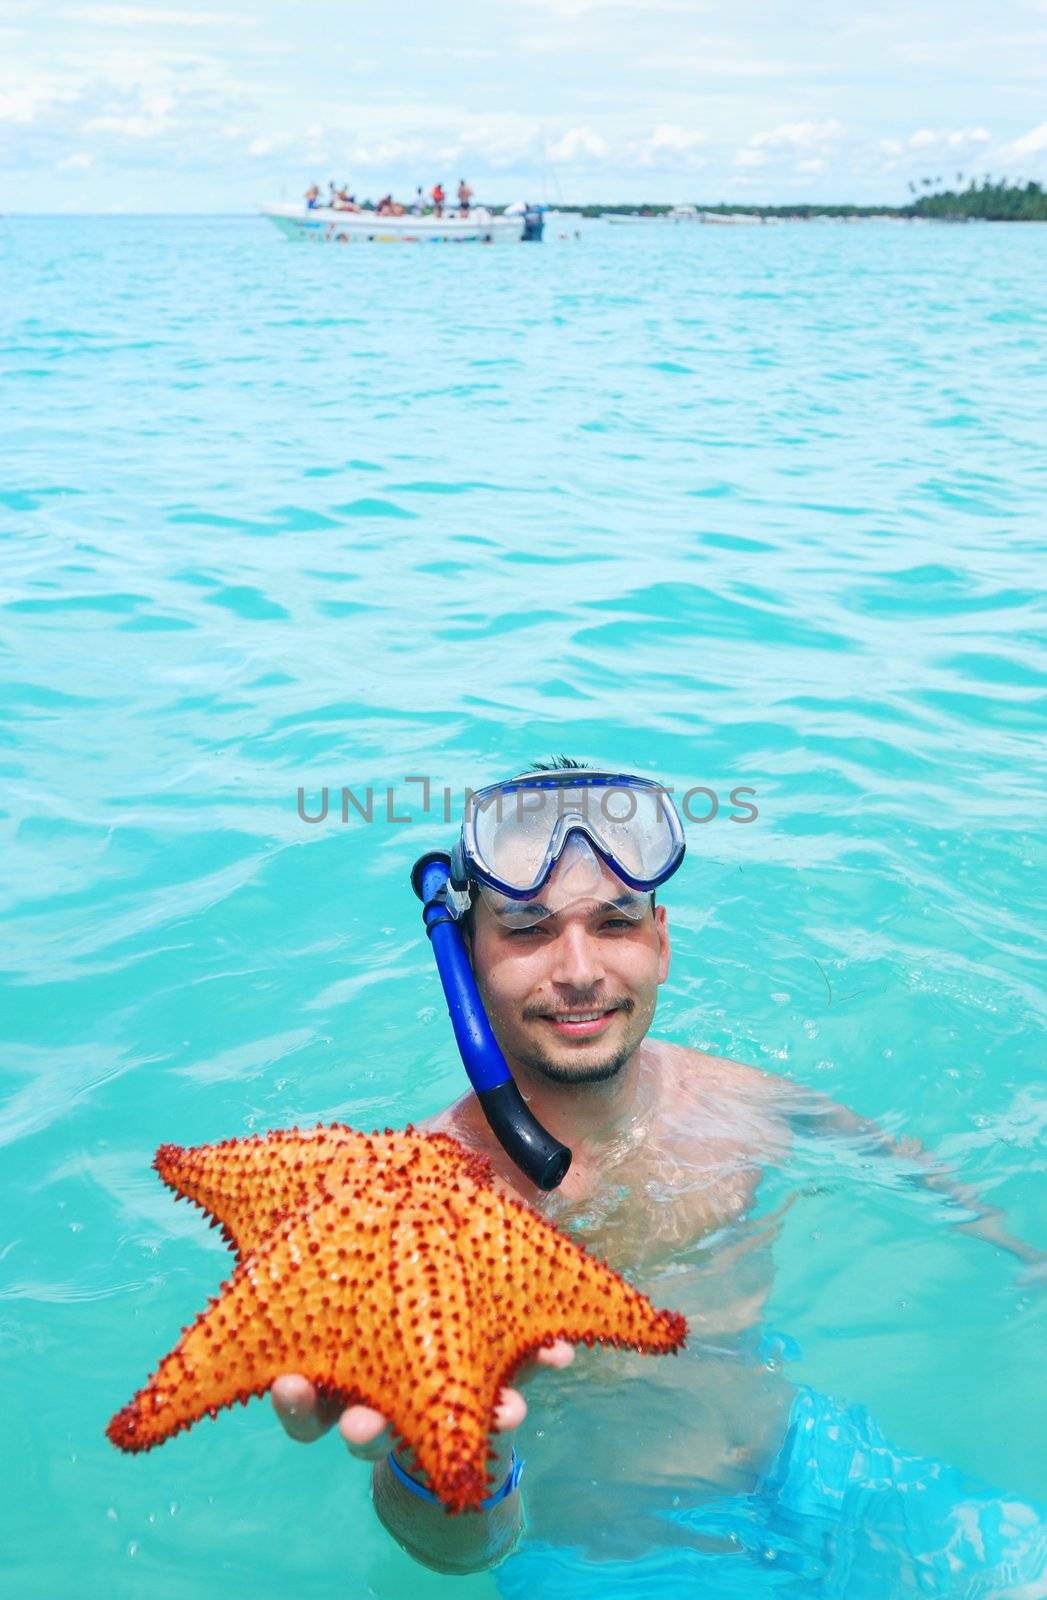 Snorkel man holding red starfish